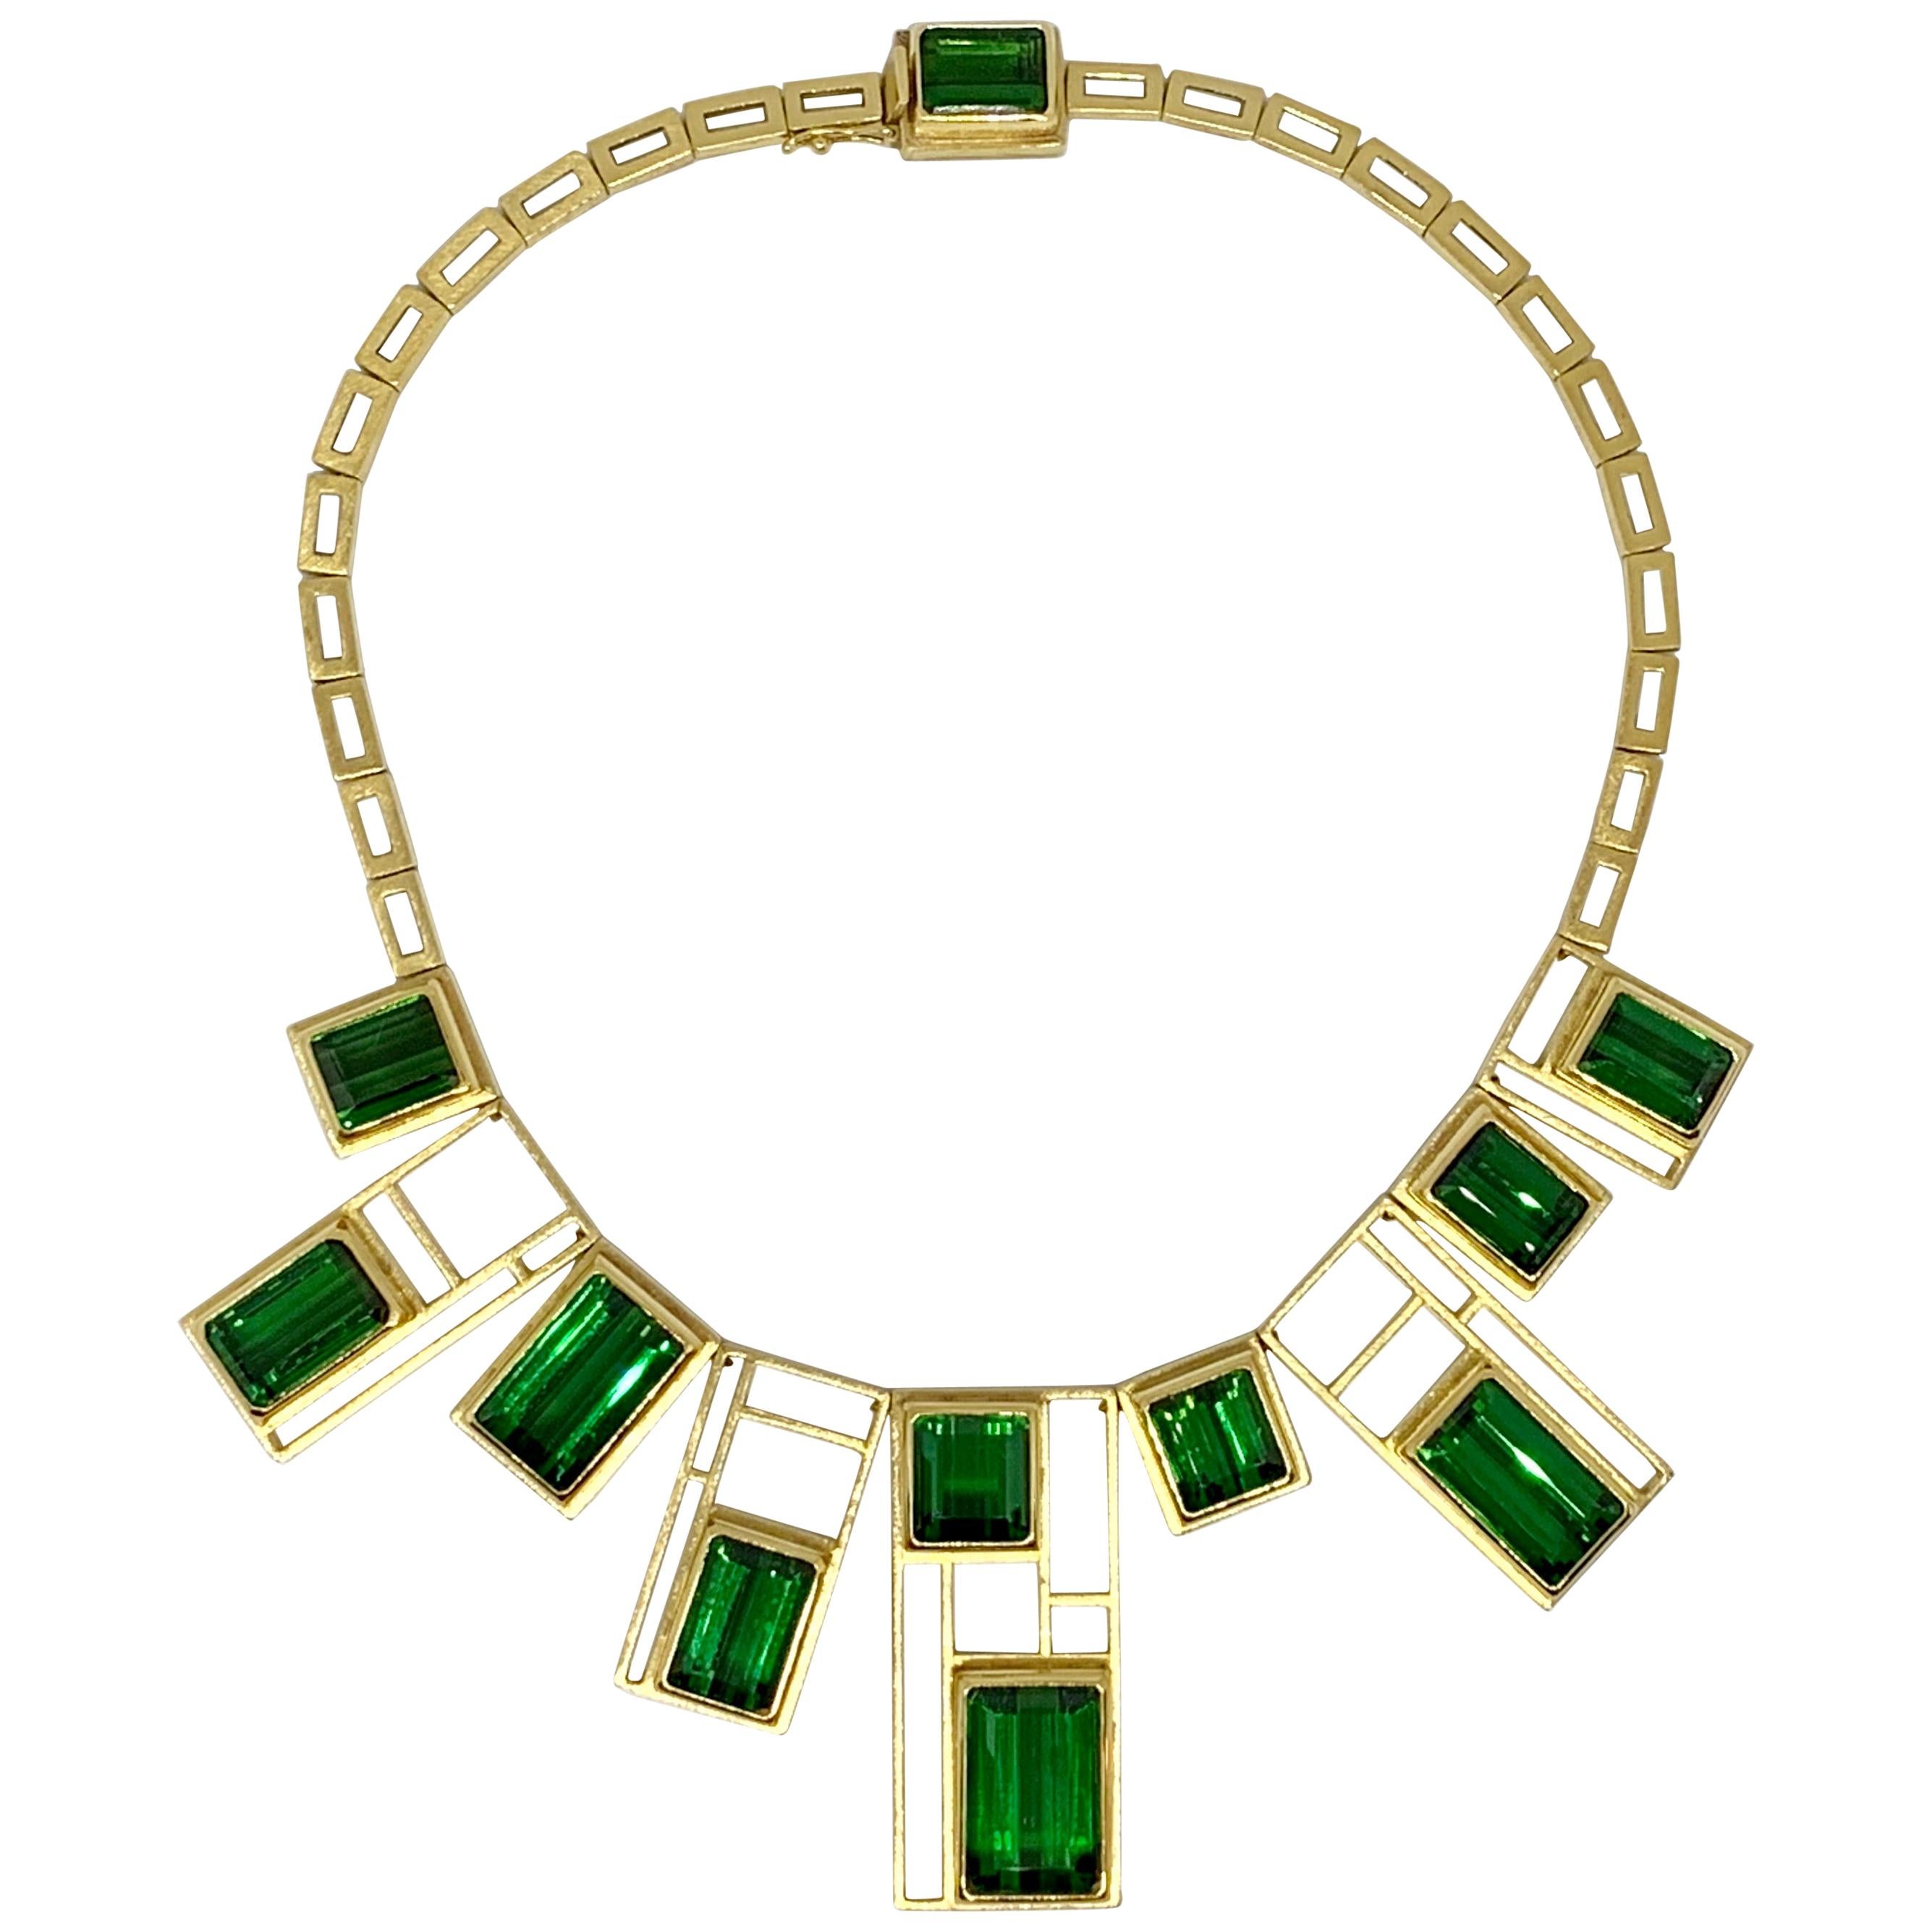 Burle Marx 18 Karat Gold Matched Green Tourmaline Necklace For Sale